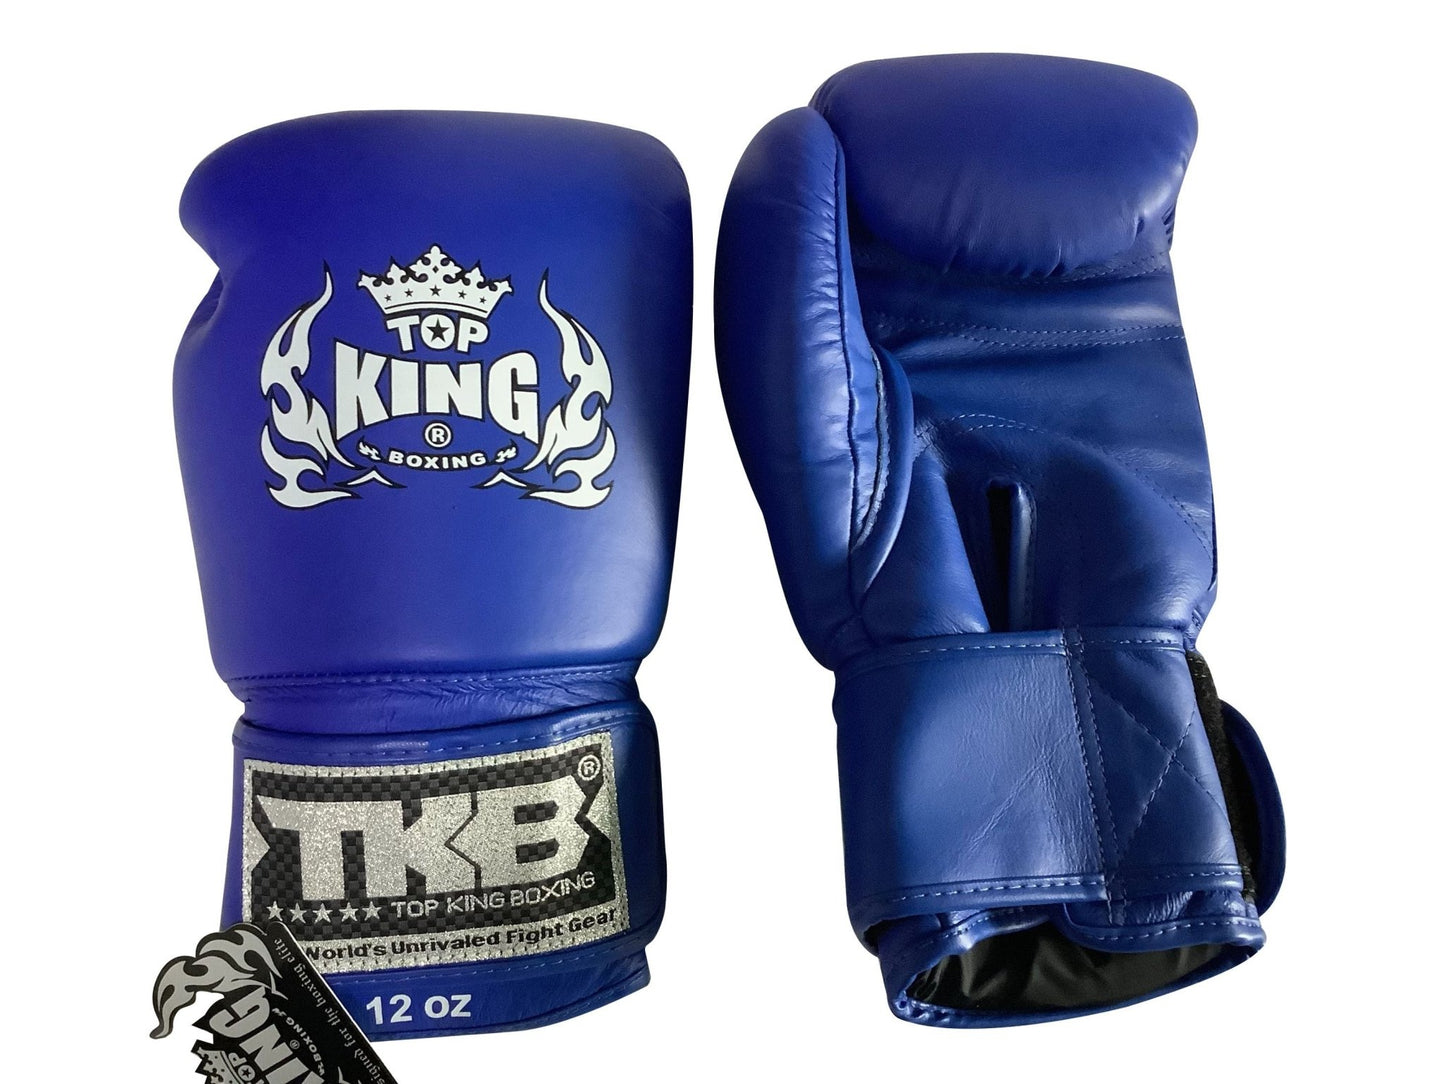 Top King Boxing Gloves "Super" TKBGUV Blue